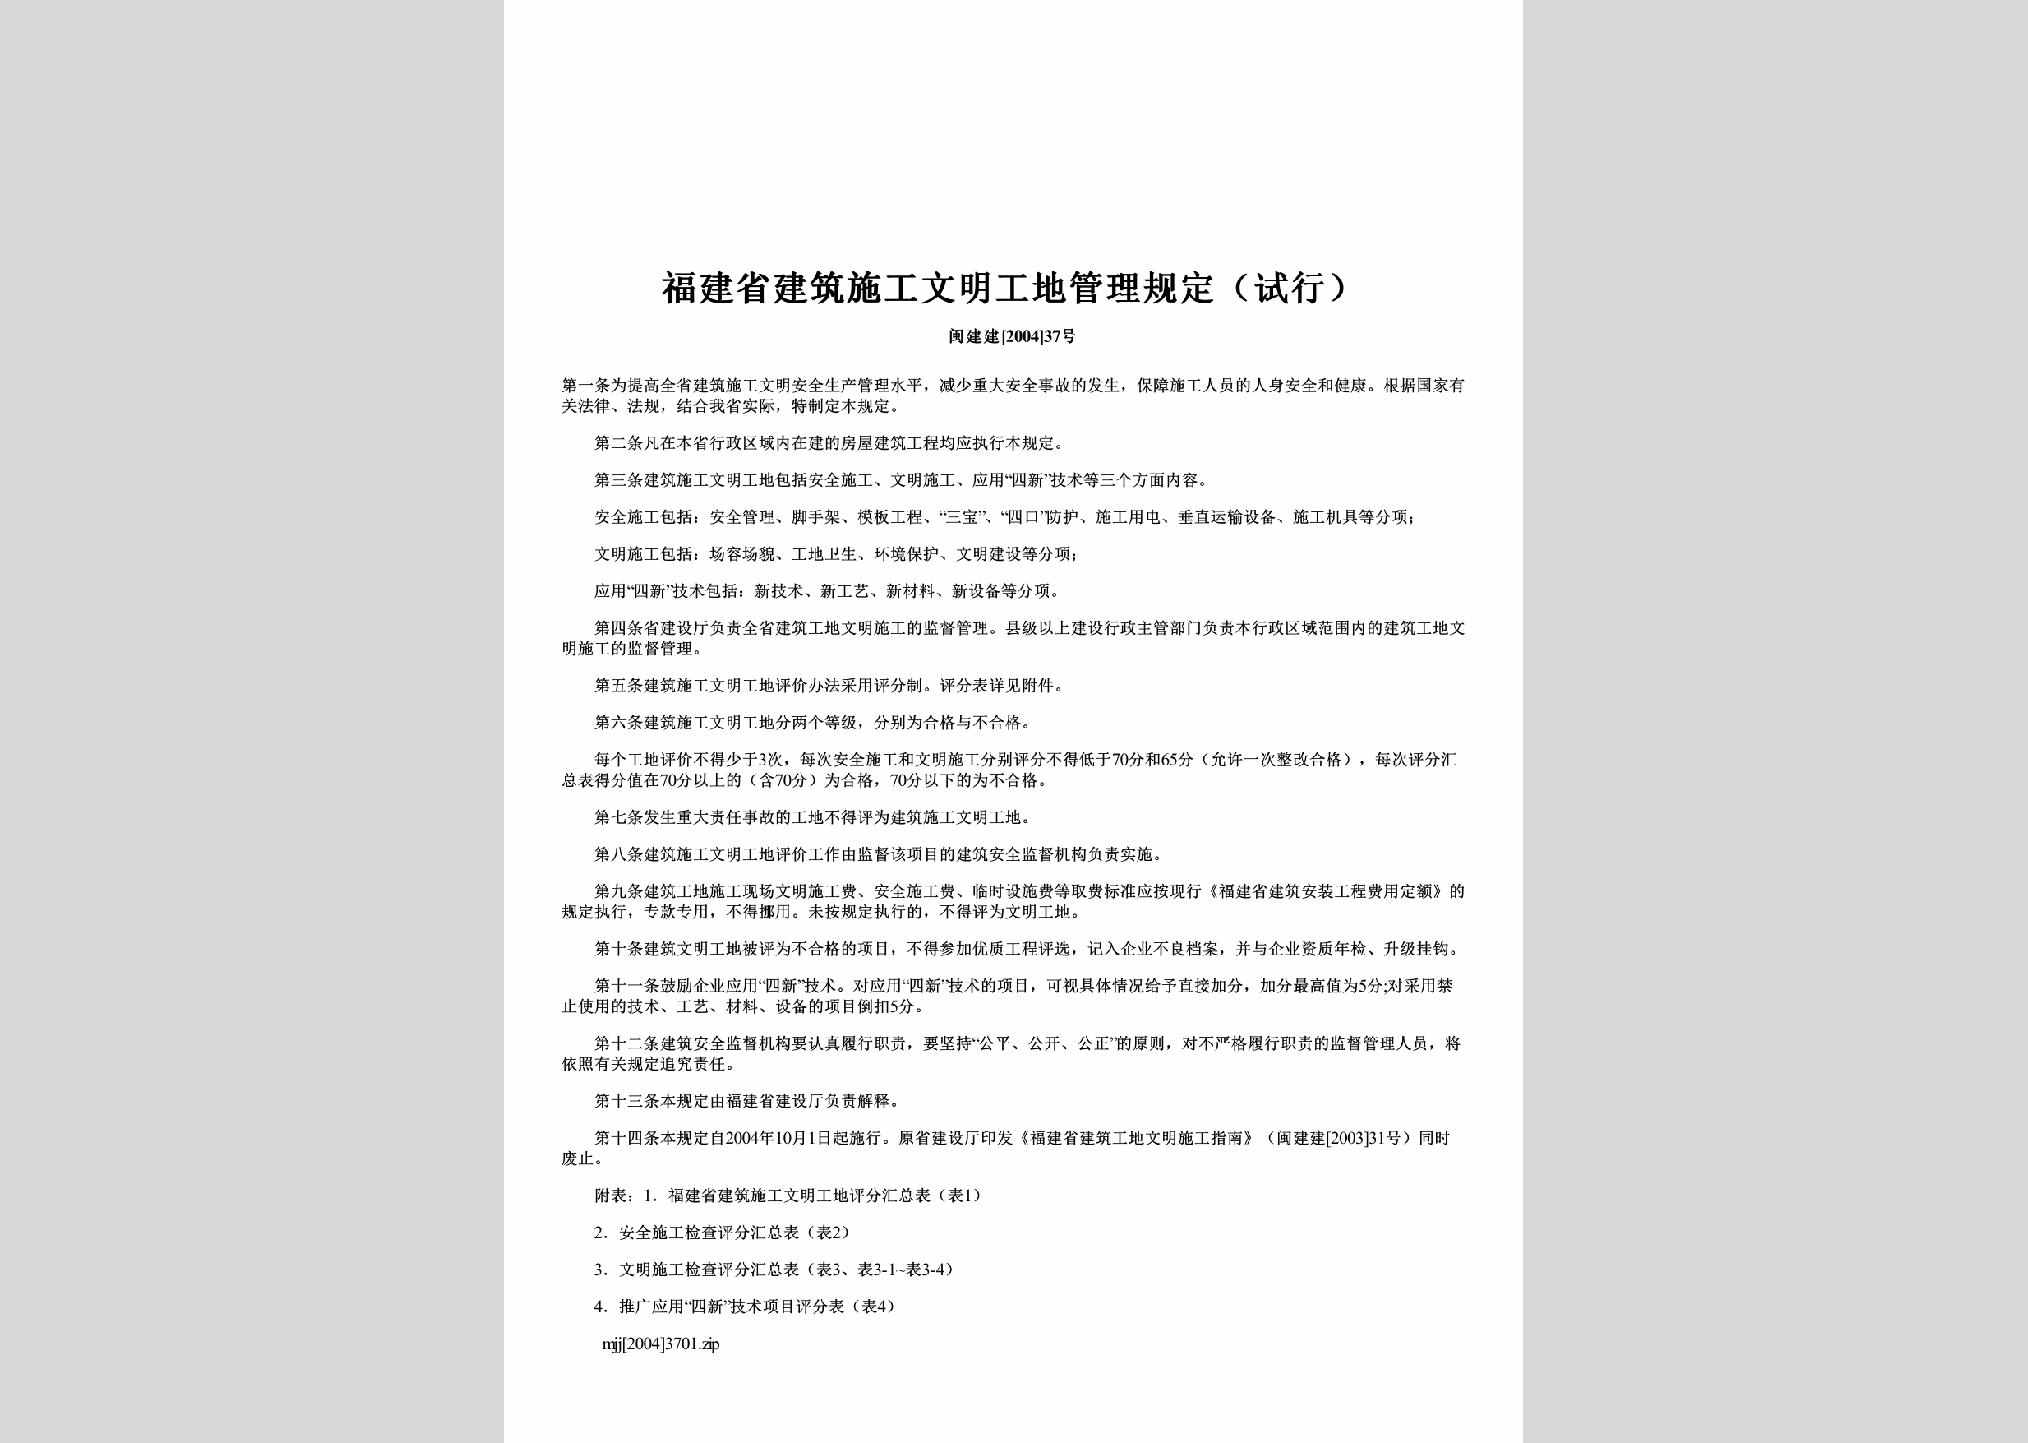 FJ-MJJ-2004-37：福建省建筑施工文明工地管理规定（试行）